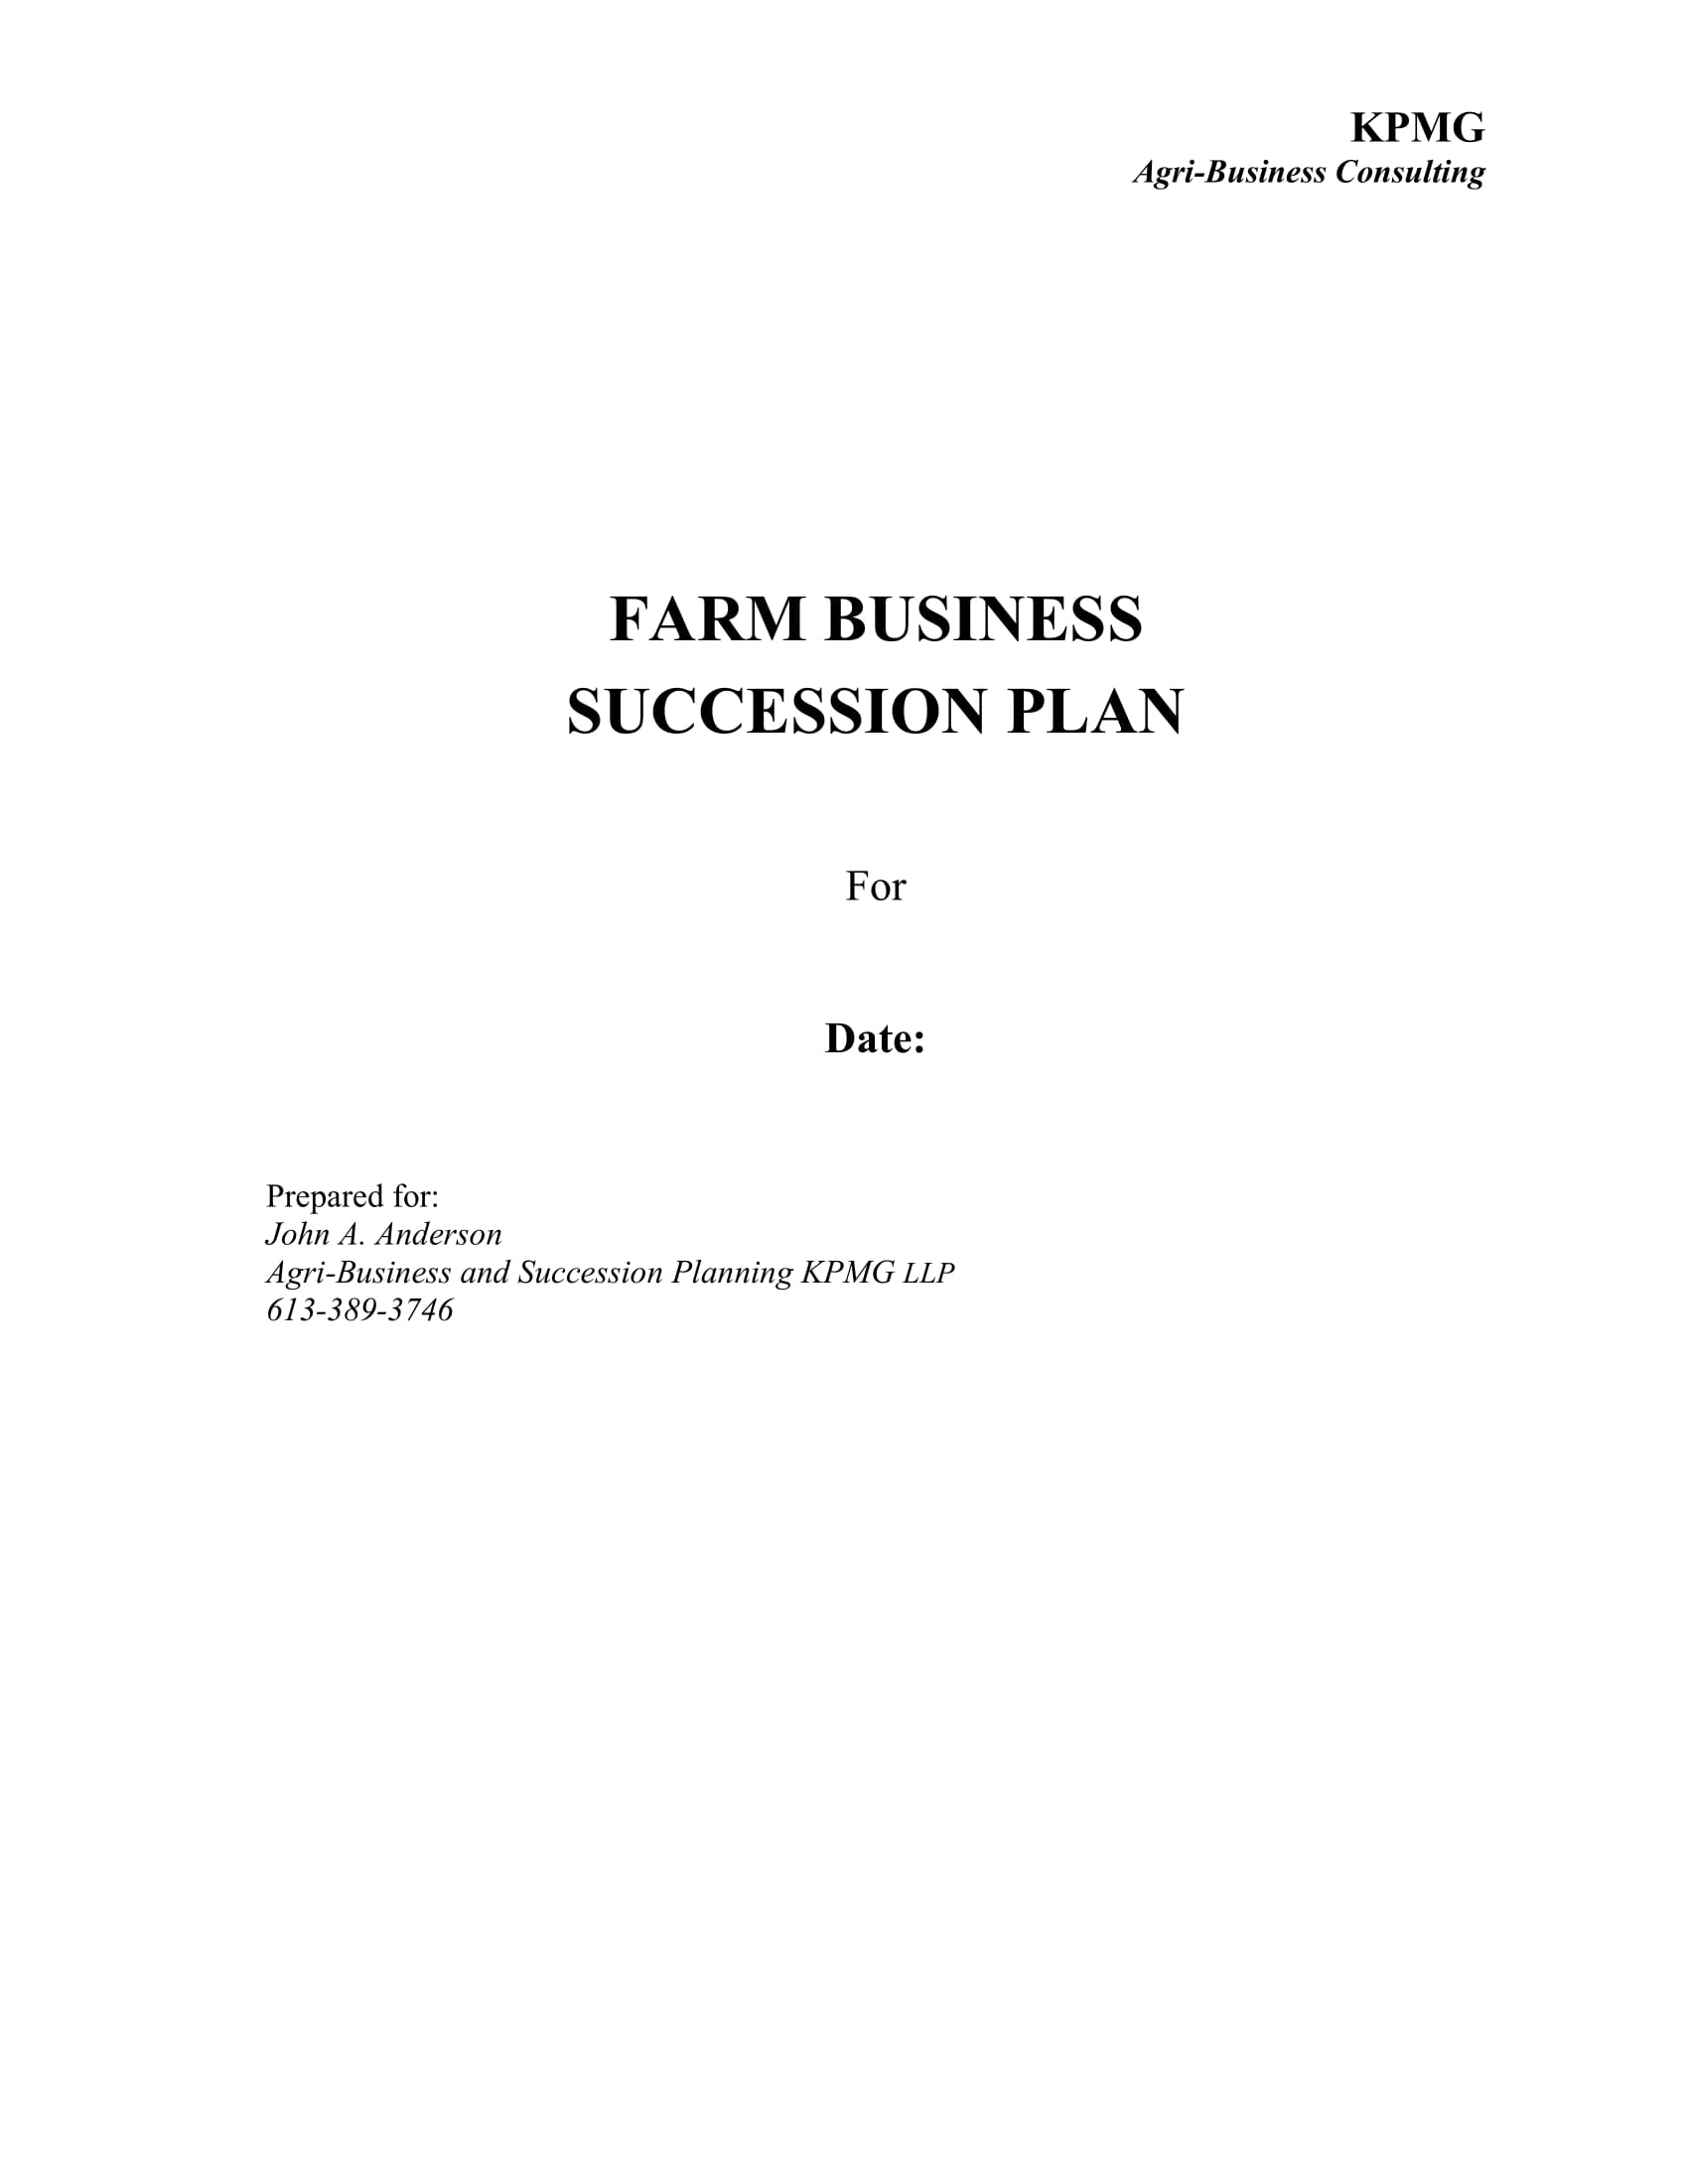 farm business succession plan example 011